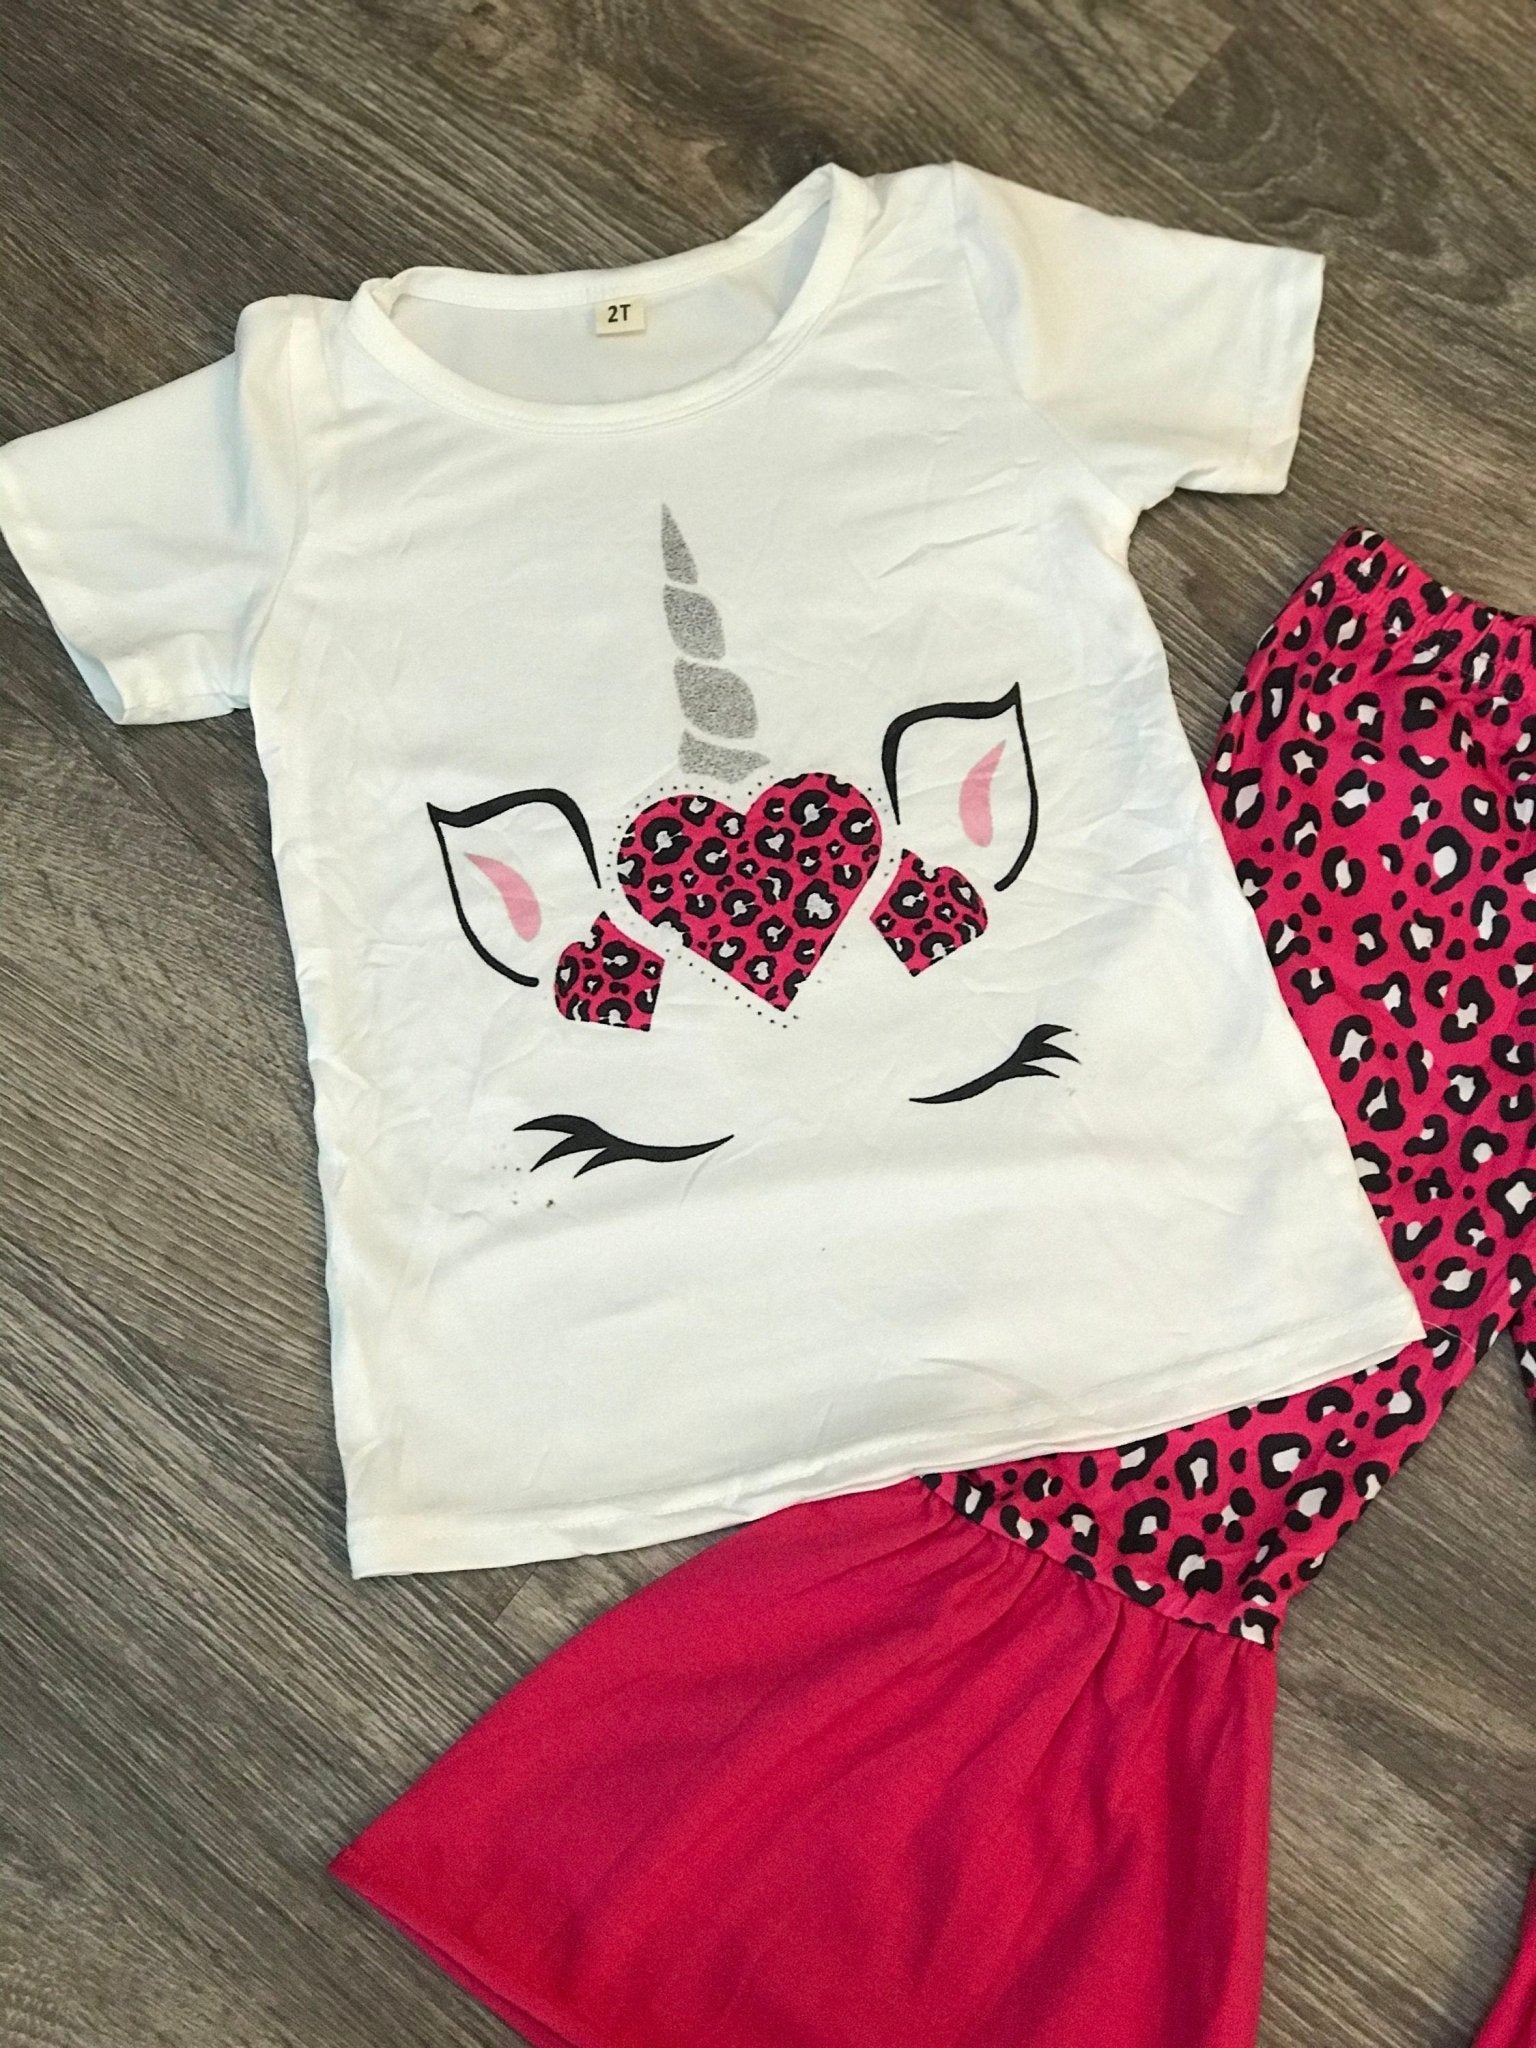 Toddler, Girls Unicorn Cheetah Bell Bottom Outfit / Hot Pink Leopard Unicorn Flares - Razels